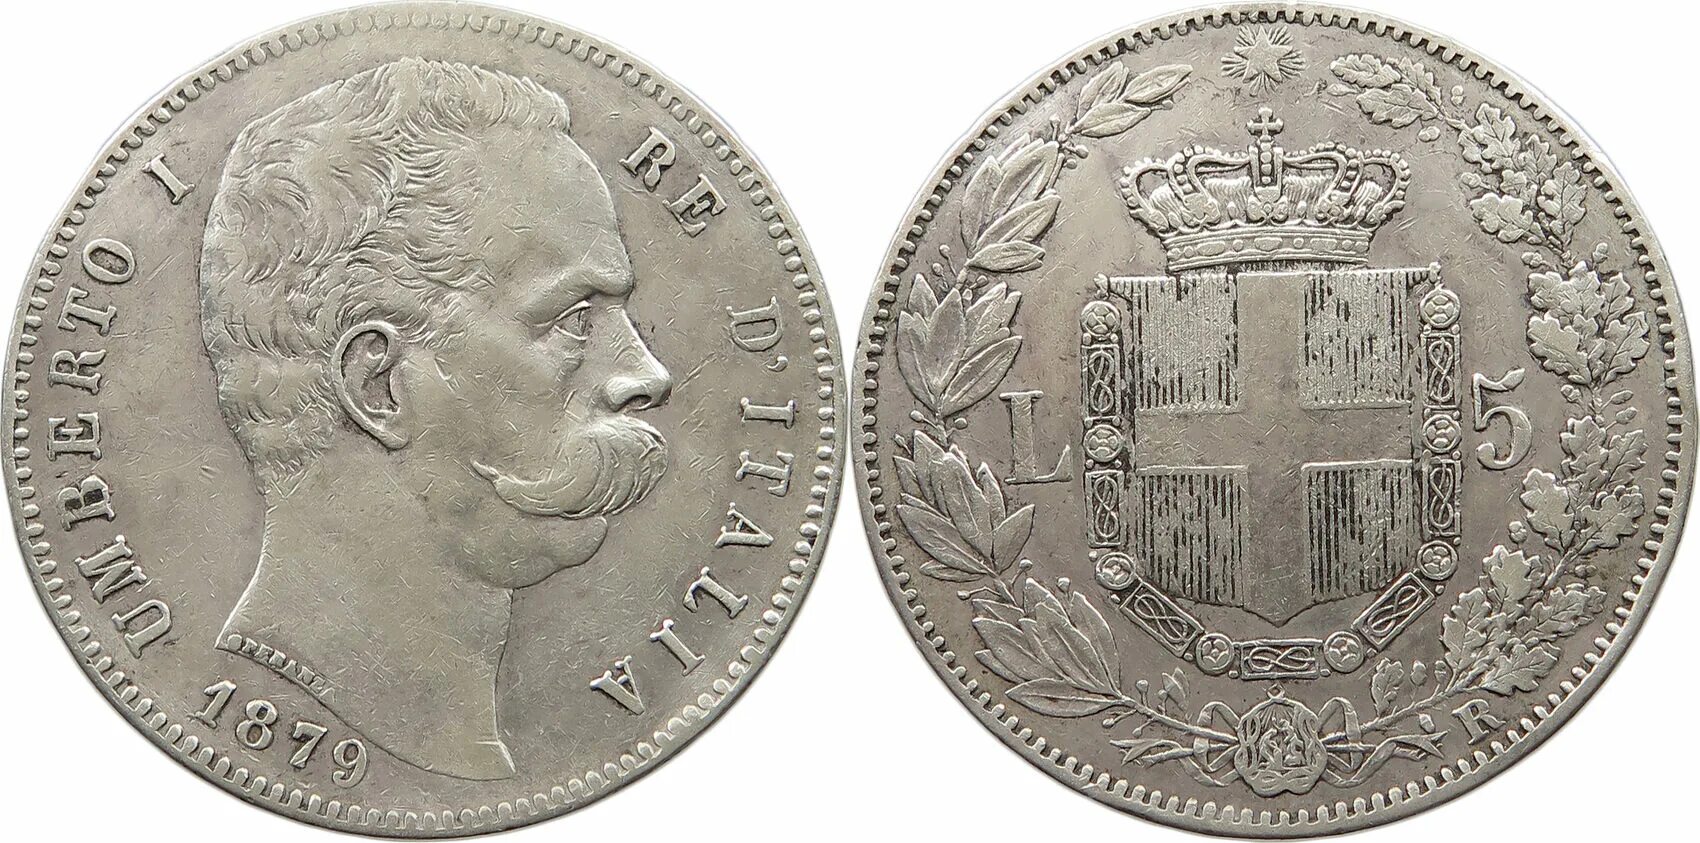 Австрия 1 Союзный талер 1868. Монета Рагуза 1646. Австрийская монета талер. Талер монета серебро.